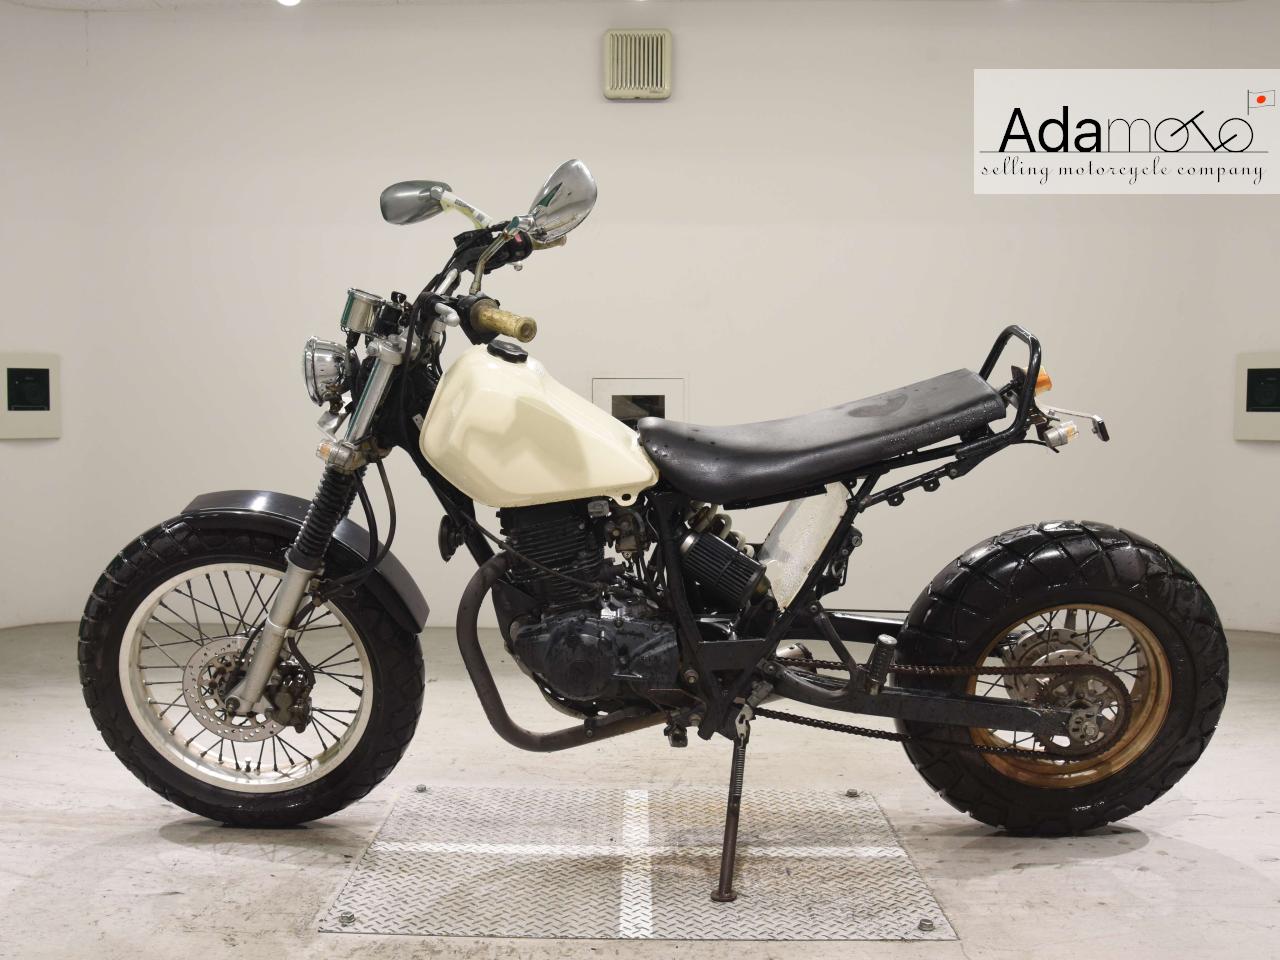 Yamaha TW225 - Adamoto - Motorcycles from Japan